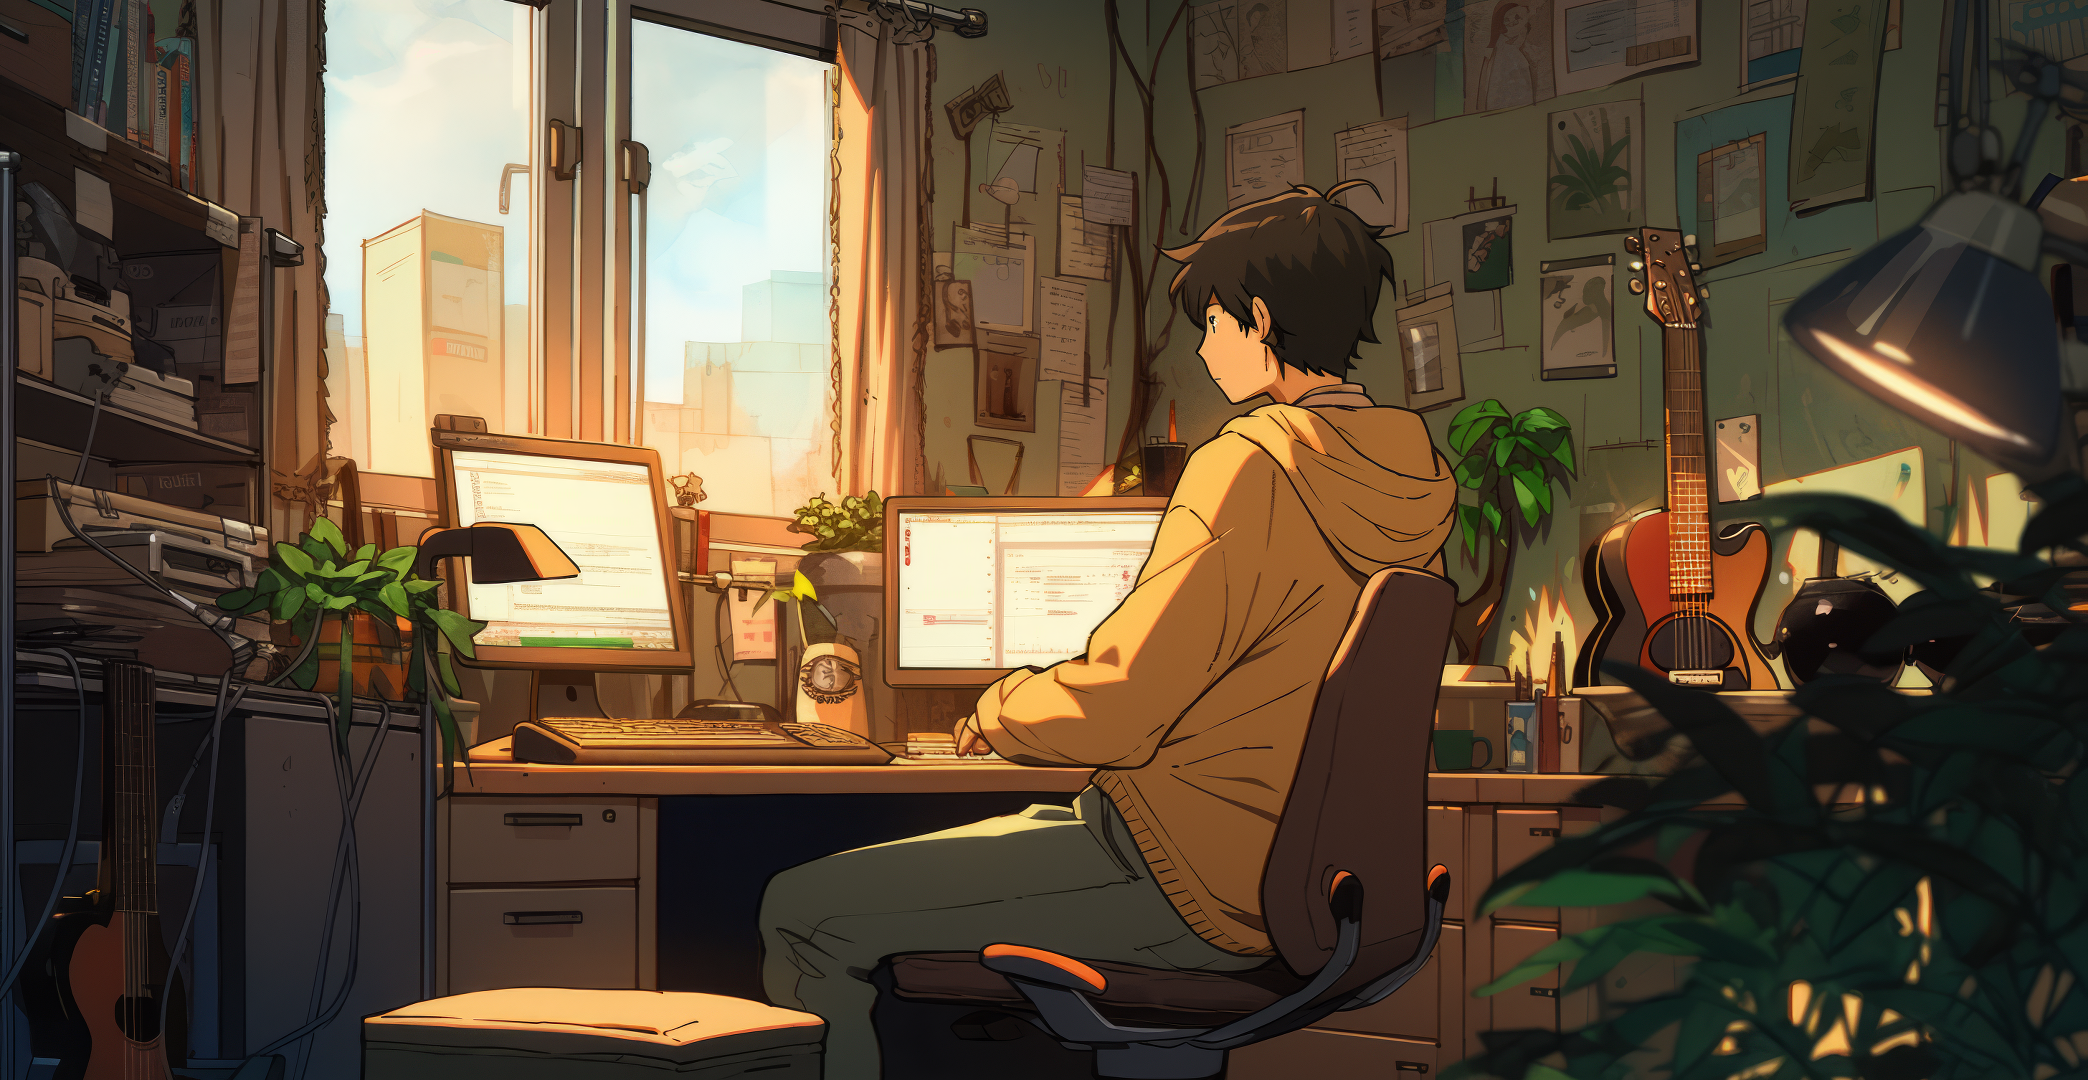 Anime Man in LoFi Desktop Room Wallpaper by patrika